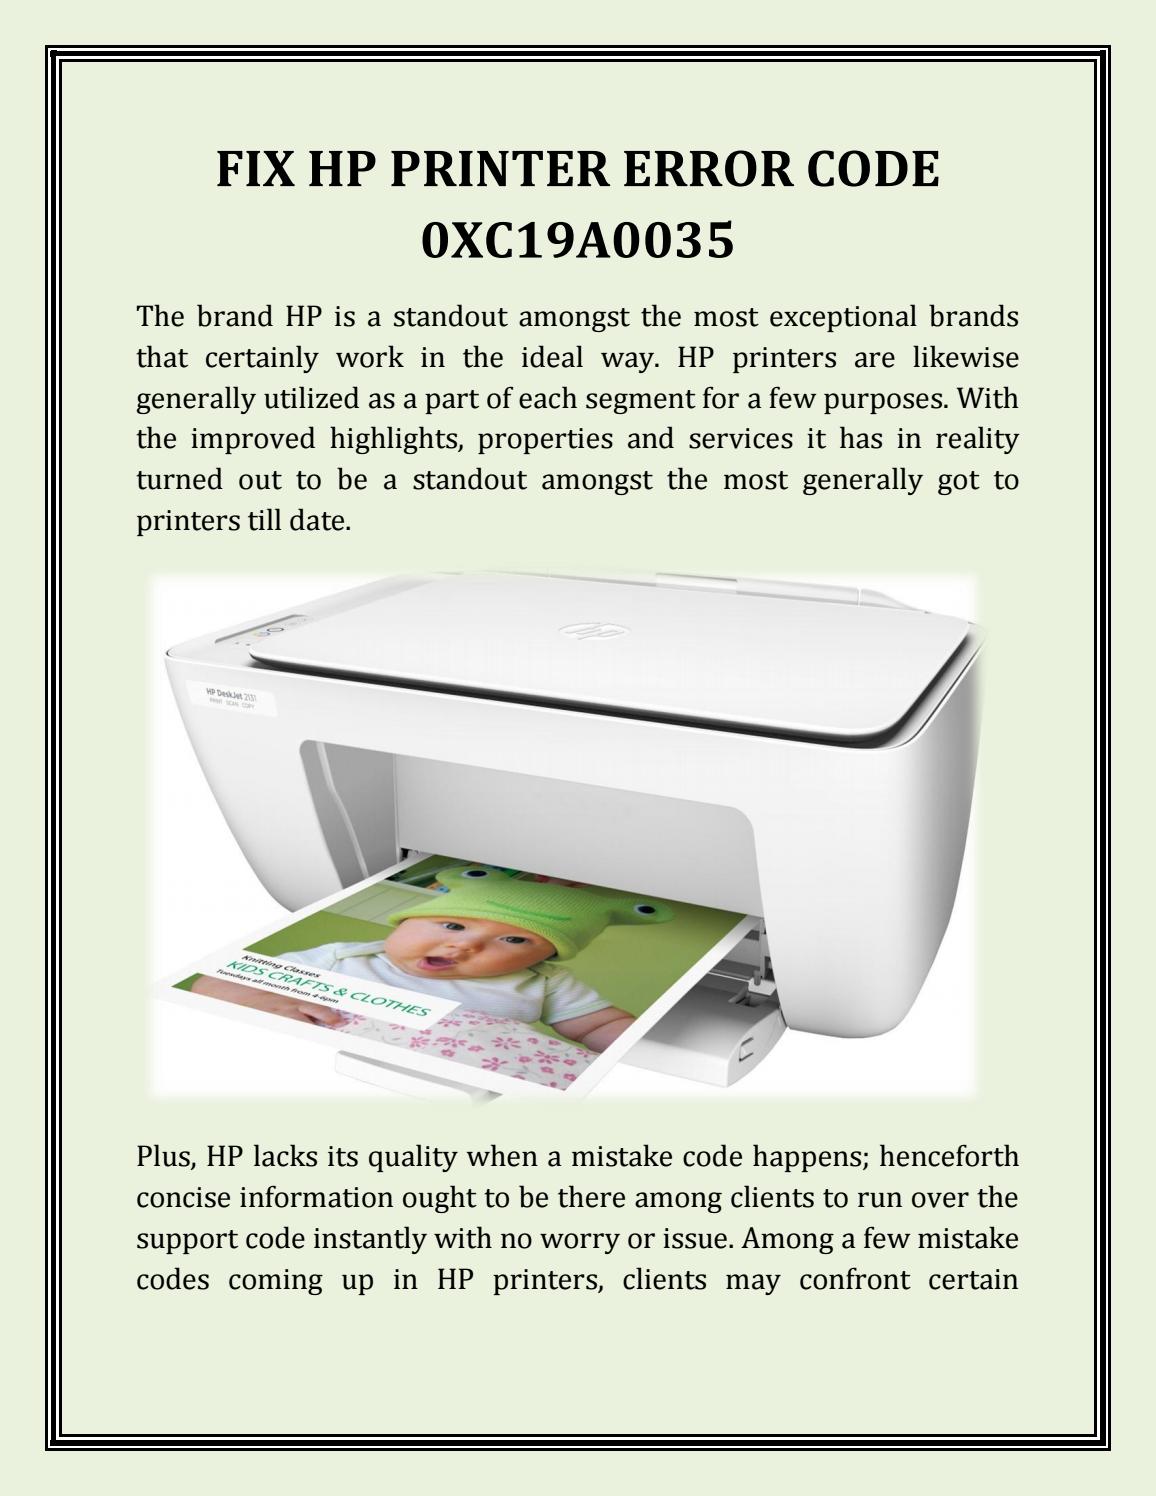 hp printer manual error code oxc19a0035